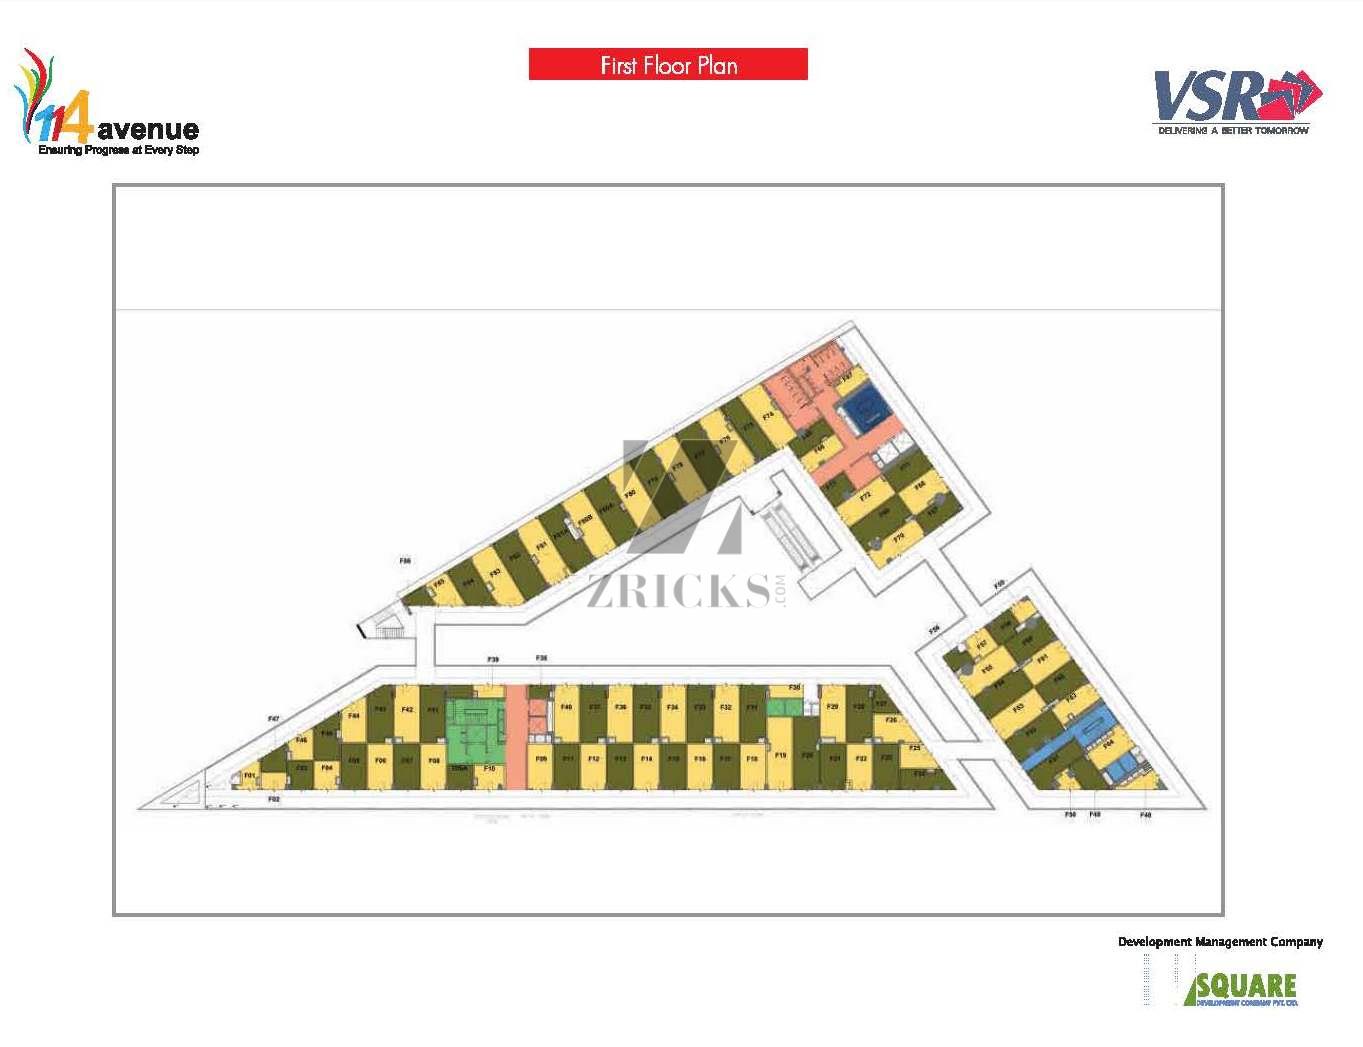 VSR 114 Avenue Floor Plan